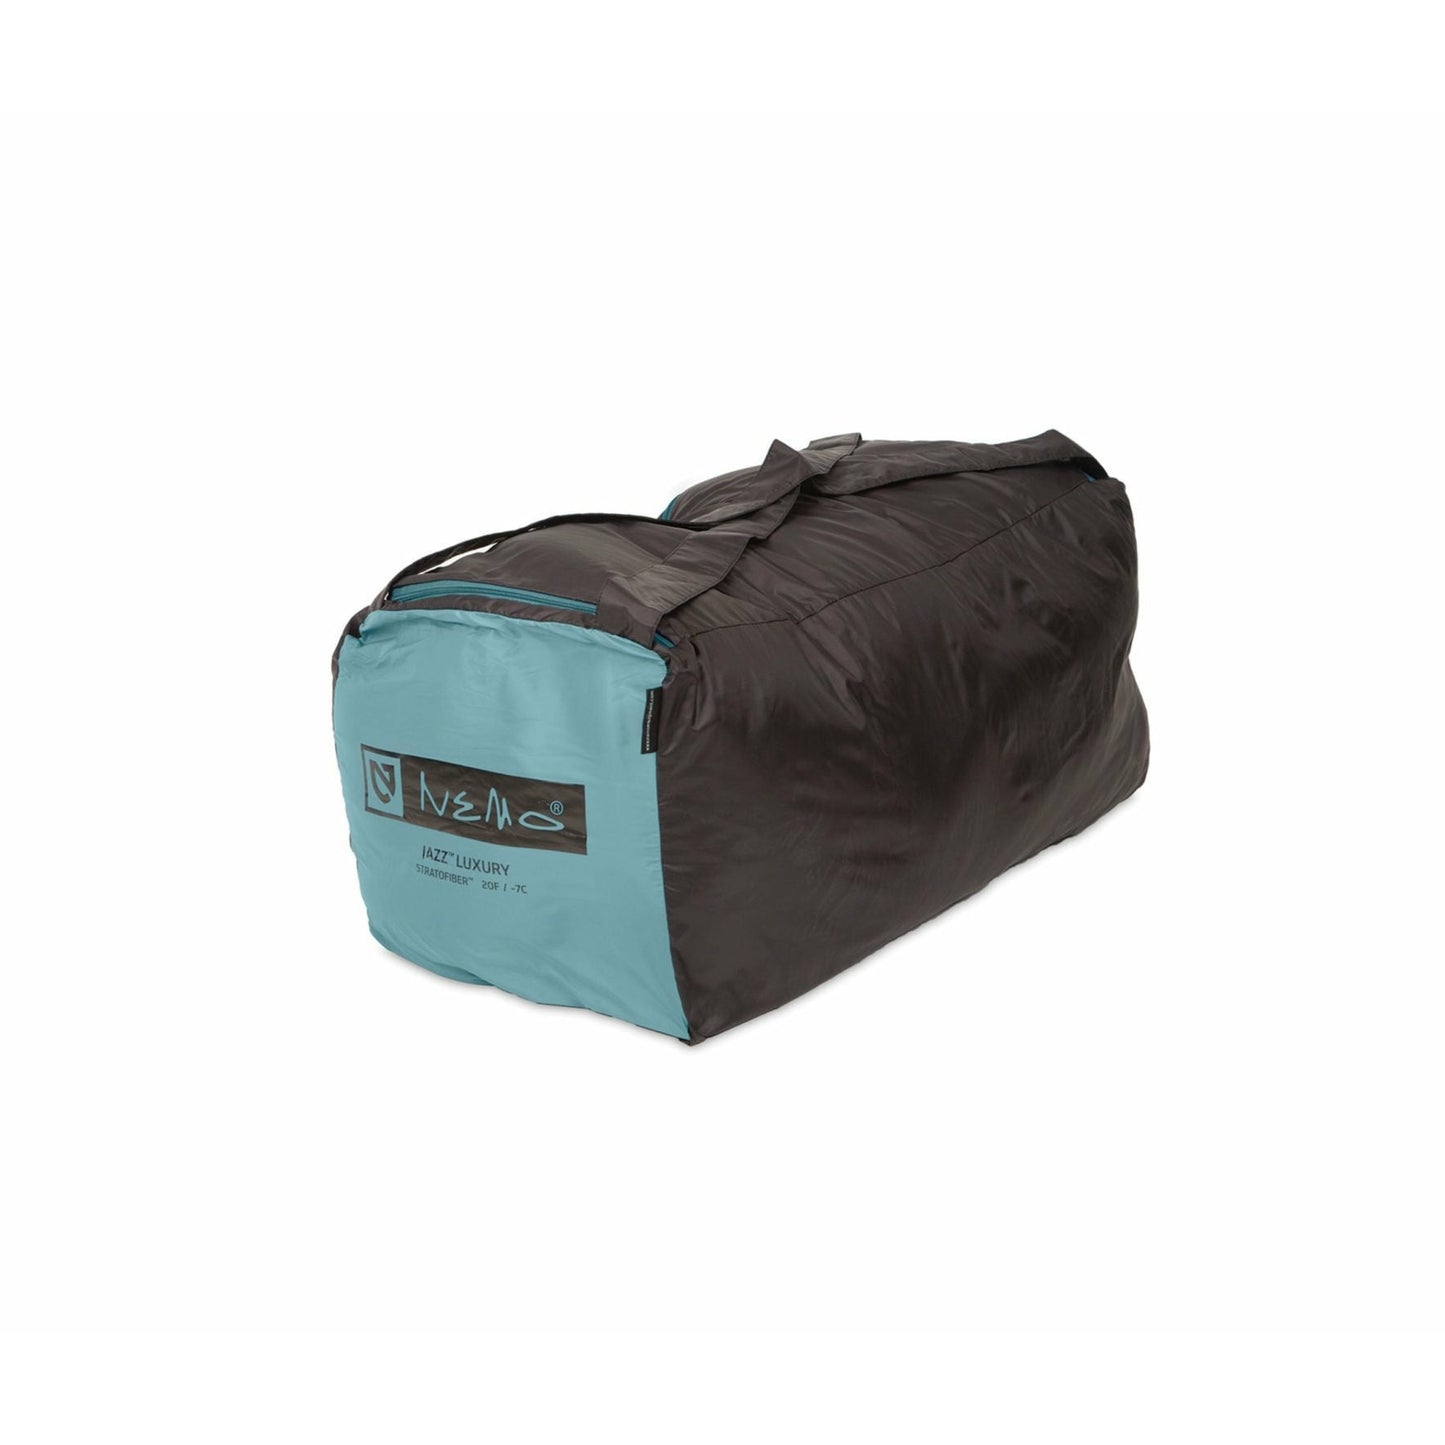 Nemo Jazz Luxury 20F/-7C Sleeping Bag